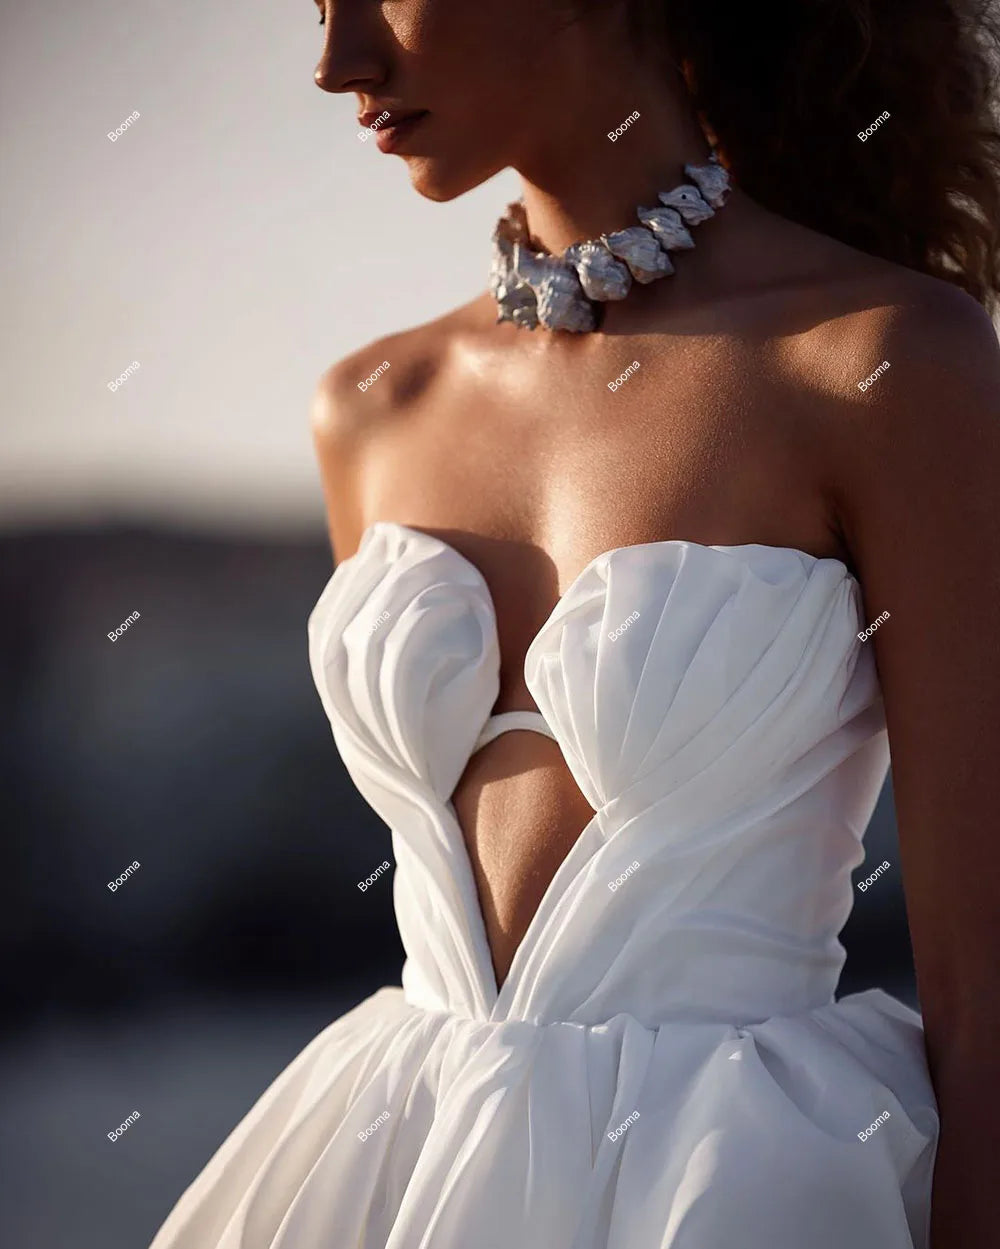 Gaun pengantin pendek elegan sederhana gaun bola tanpa gaun putri duyung pengantin wanita gaun malam untuk wanita pesta koktail gaun